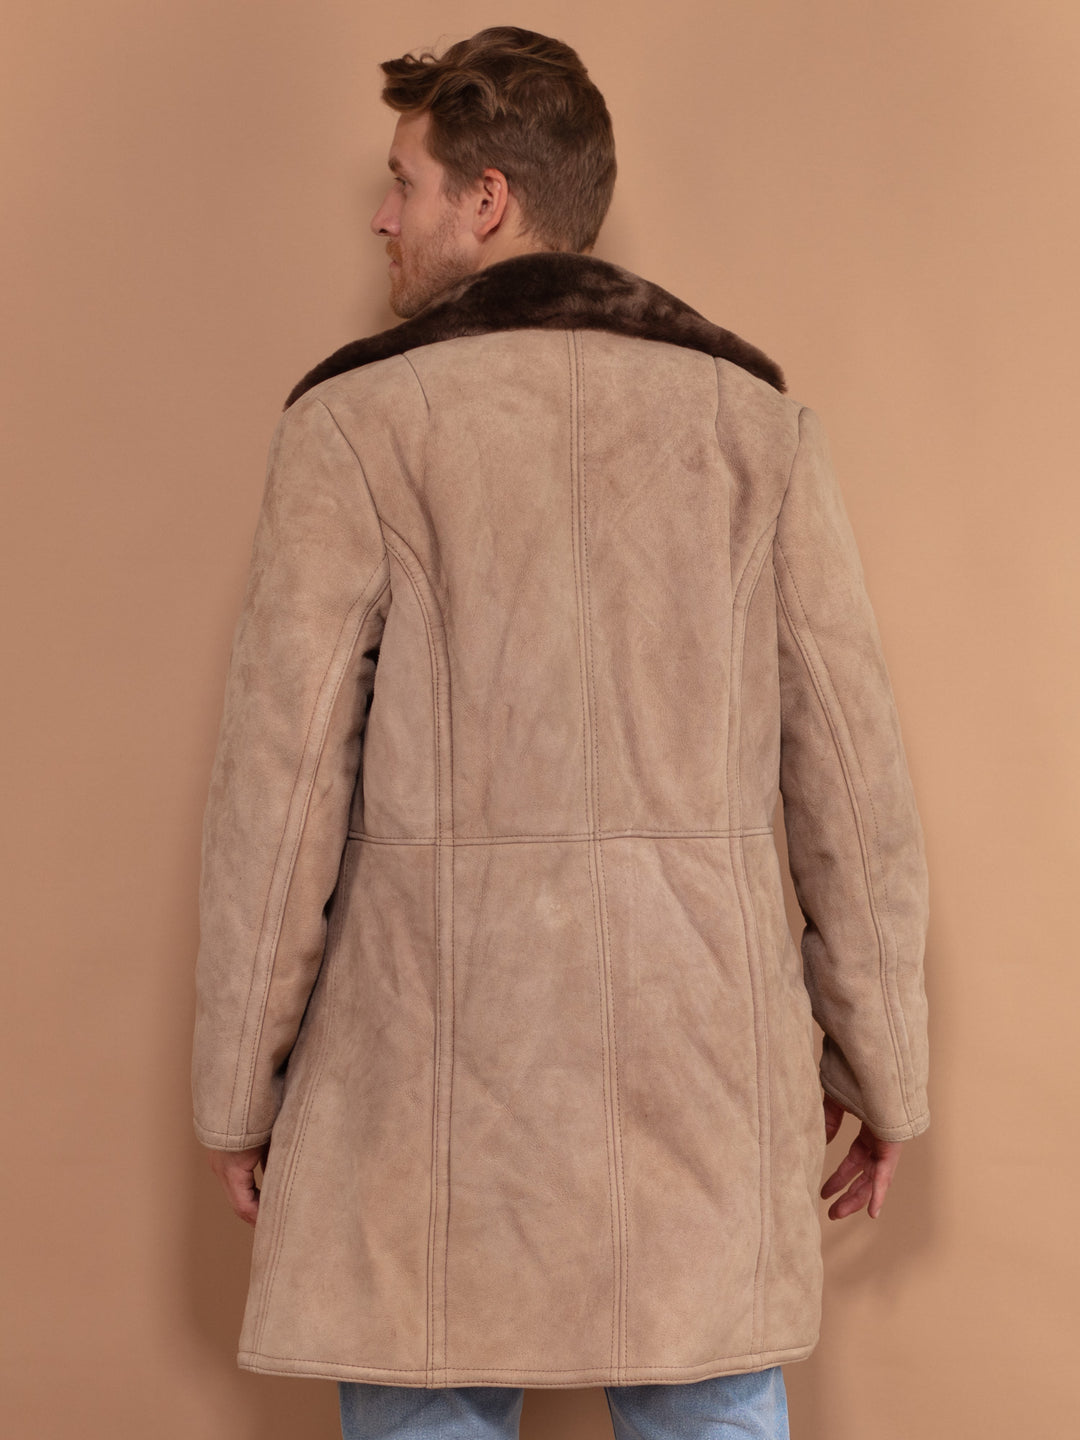 Beige Sheepskin Coat 70's, size Medium, Vintage Men Shearling Suede Coat, Collared Retro Winter Coat, Vintage Sustainable Clothing